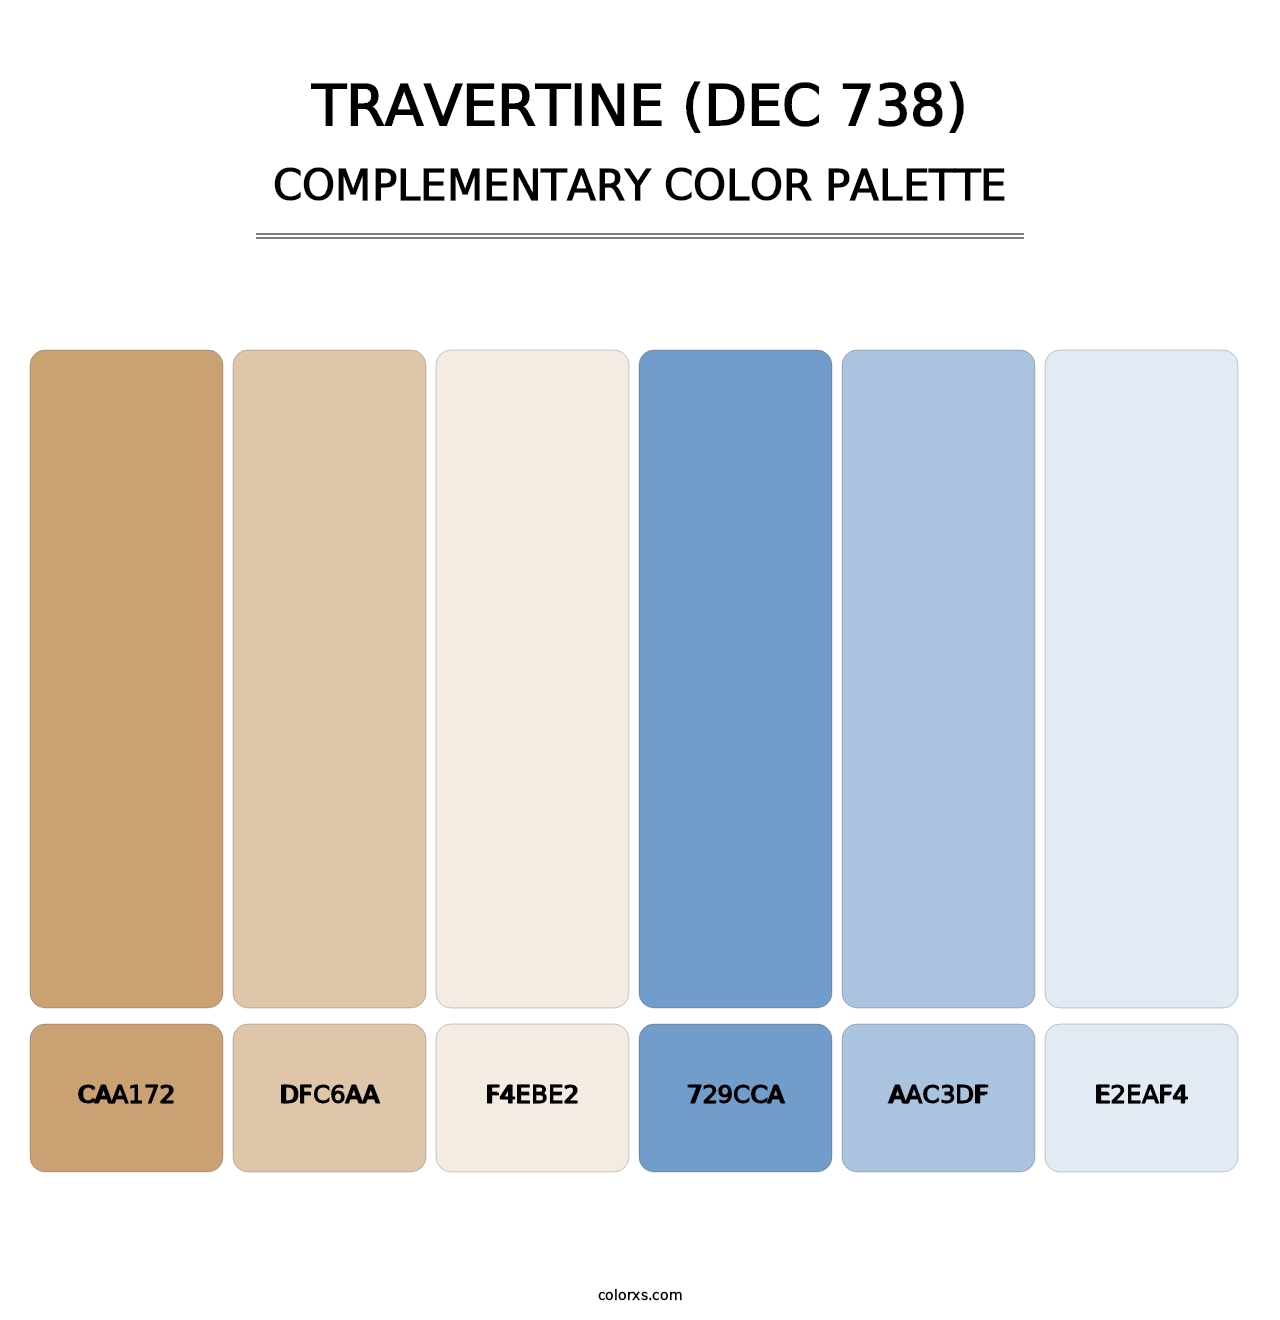 Travertine (DEC 738) - Complementary Color Palette